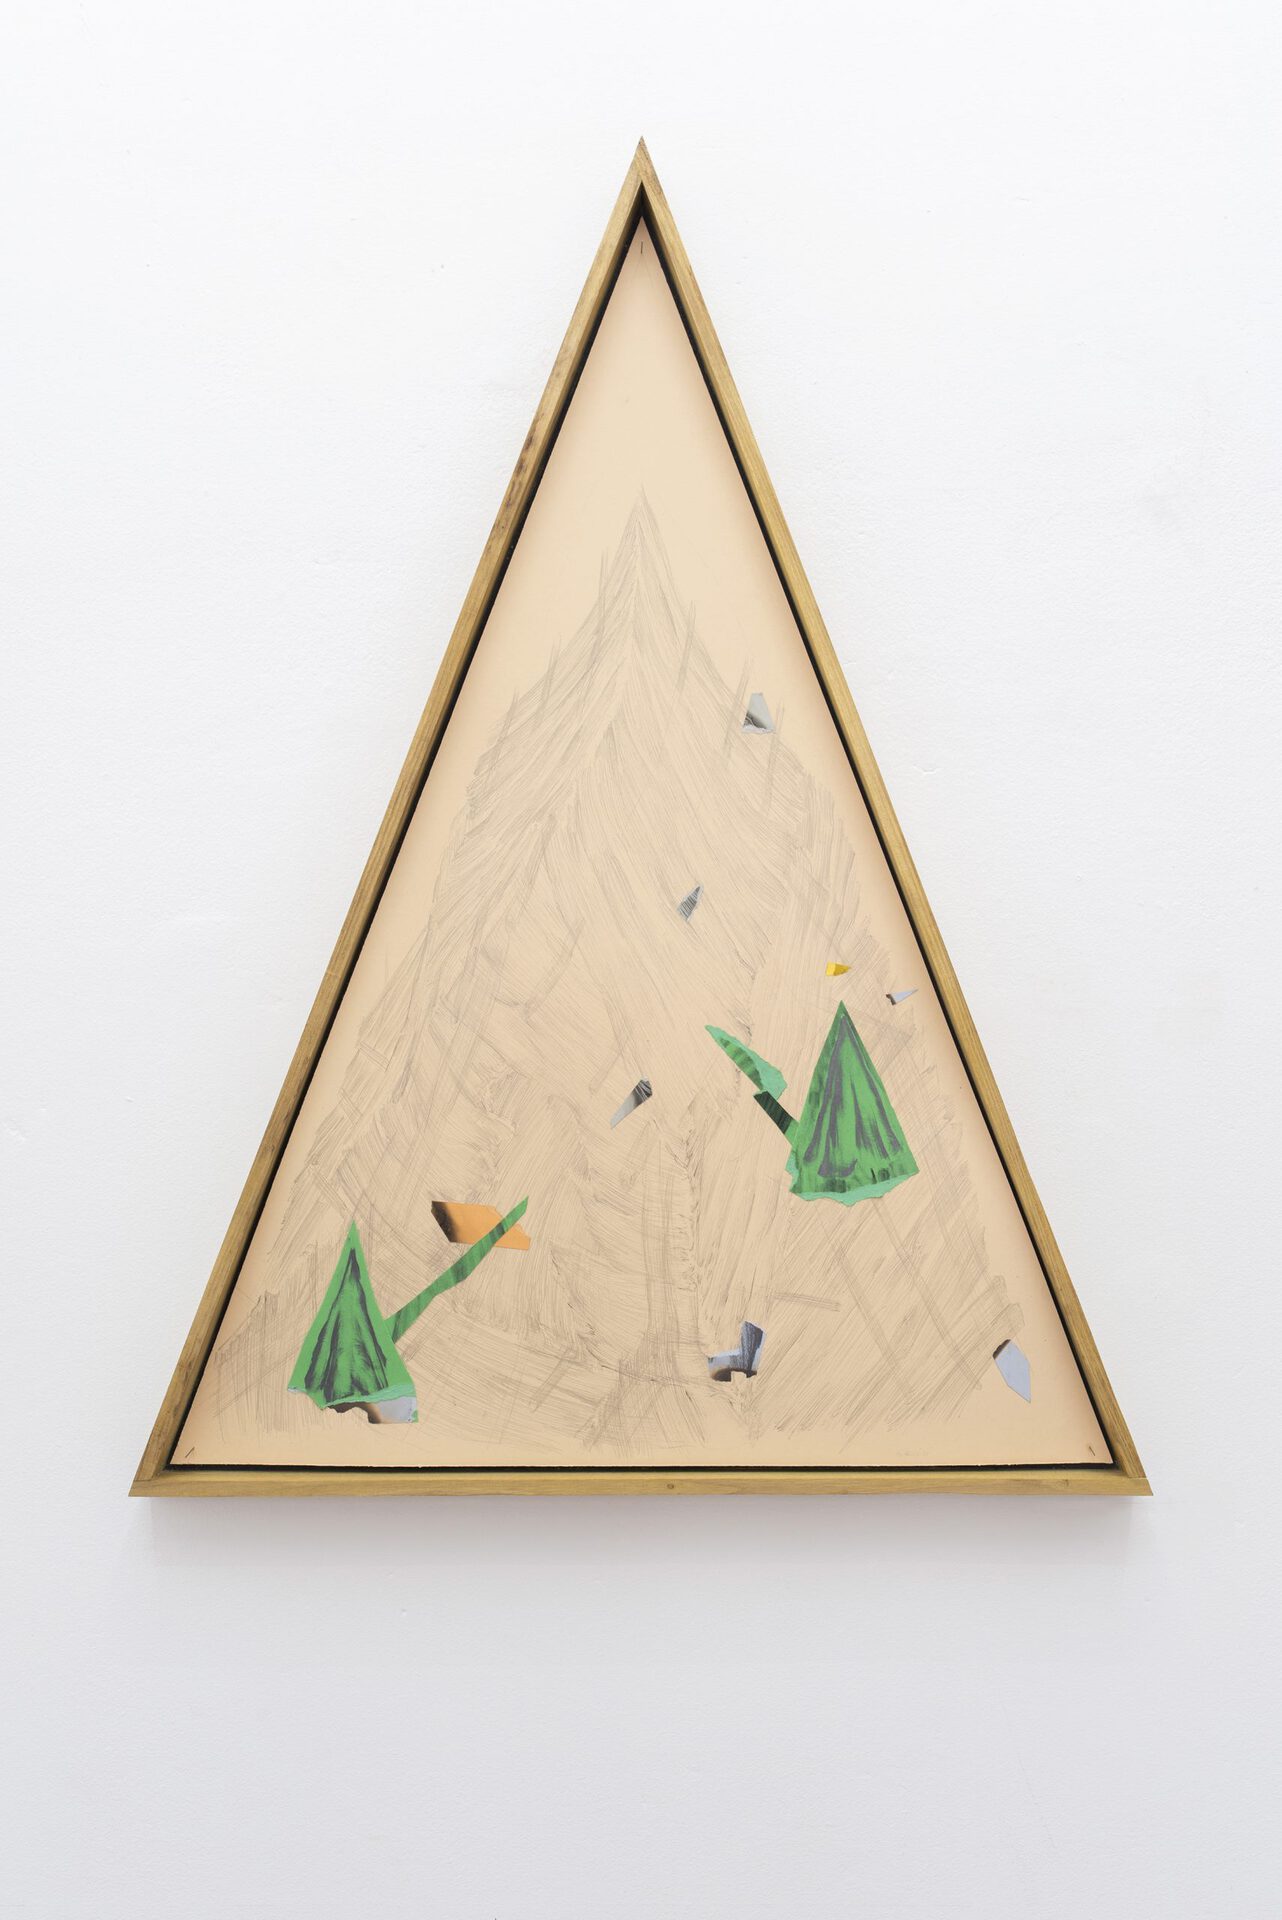 Jonas Dehnen, ’Hüttenhirn’, collage, pyrography and pencil on paper, black locust artist’s frame, 67 x 90 cm, 2020